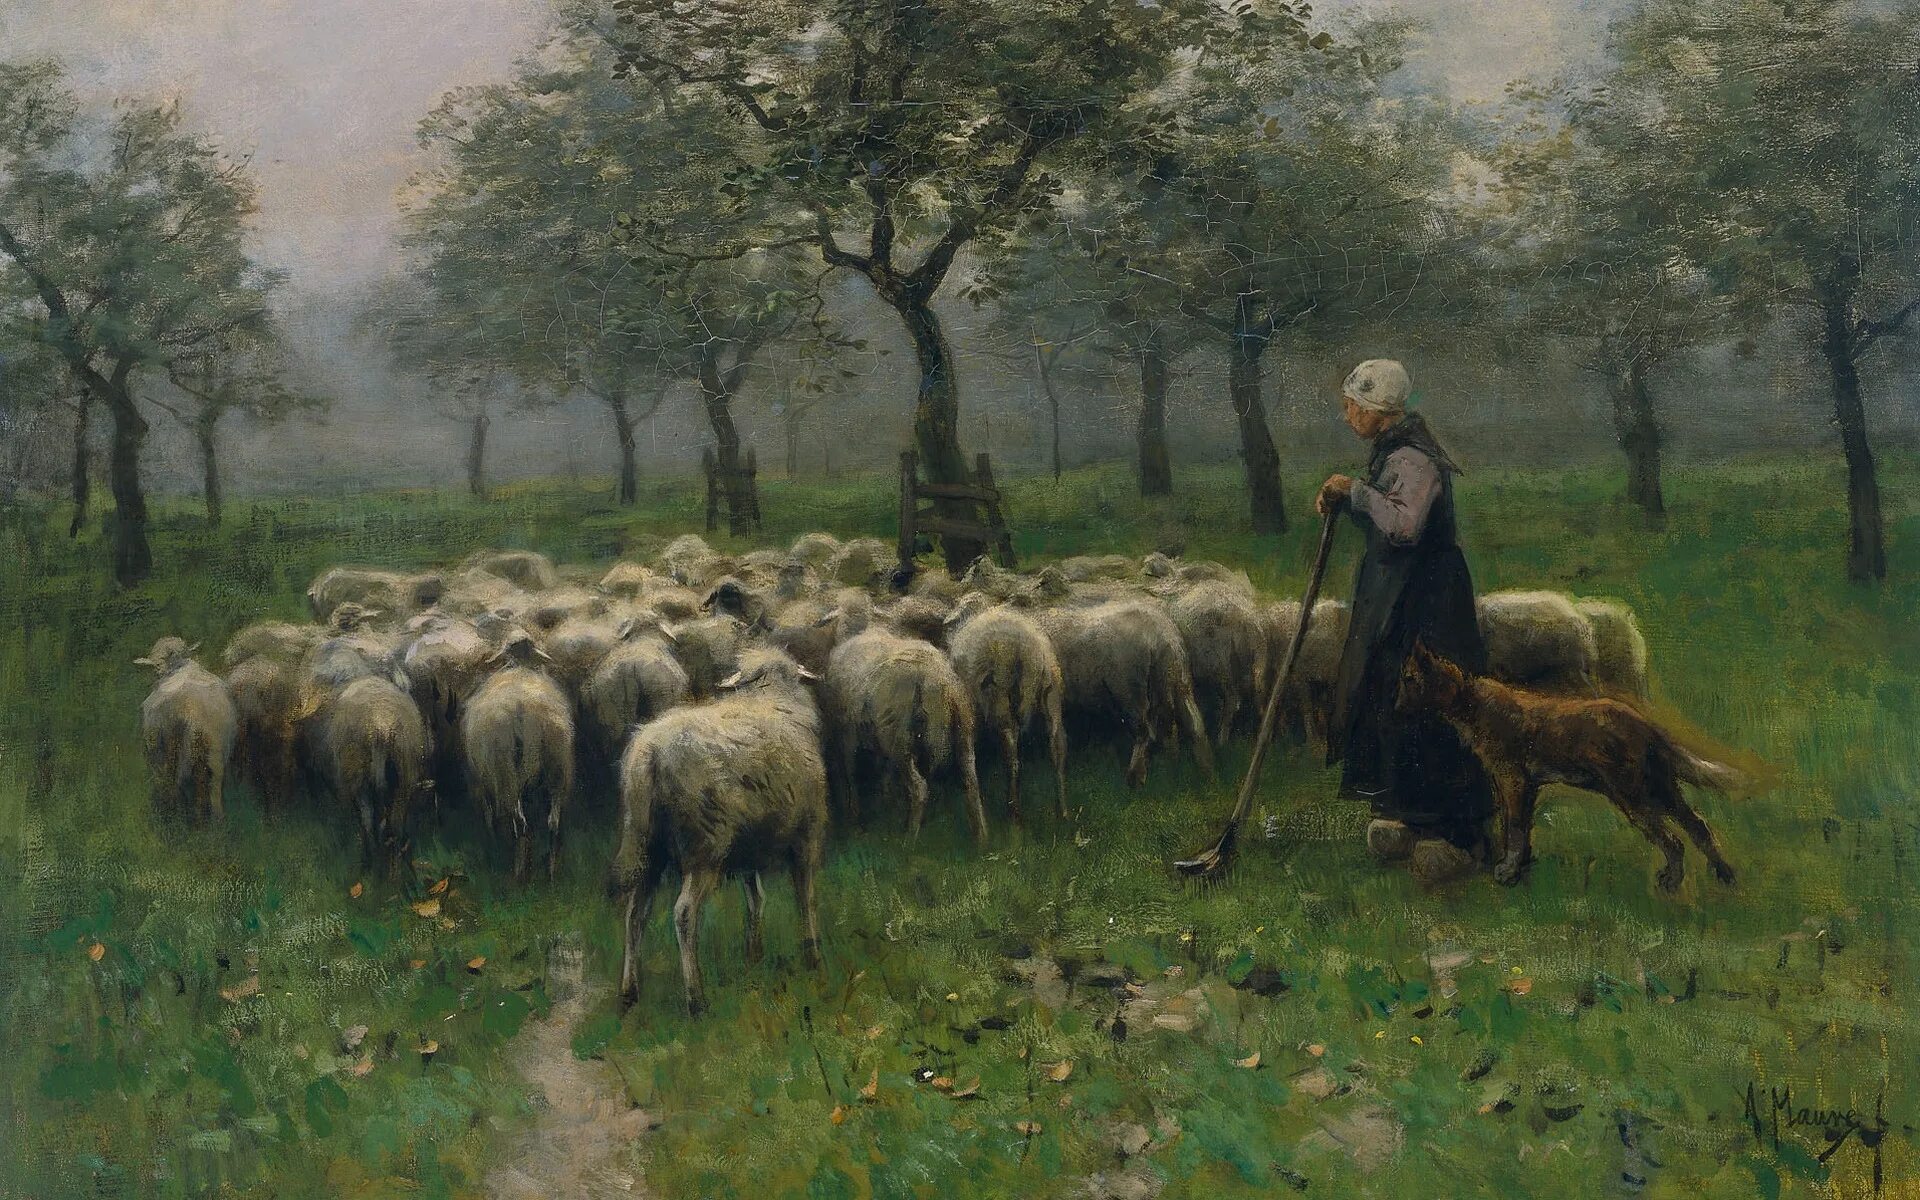 Пастух гонит стадо. Мауве Схевенингенская картина.